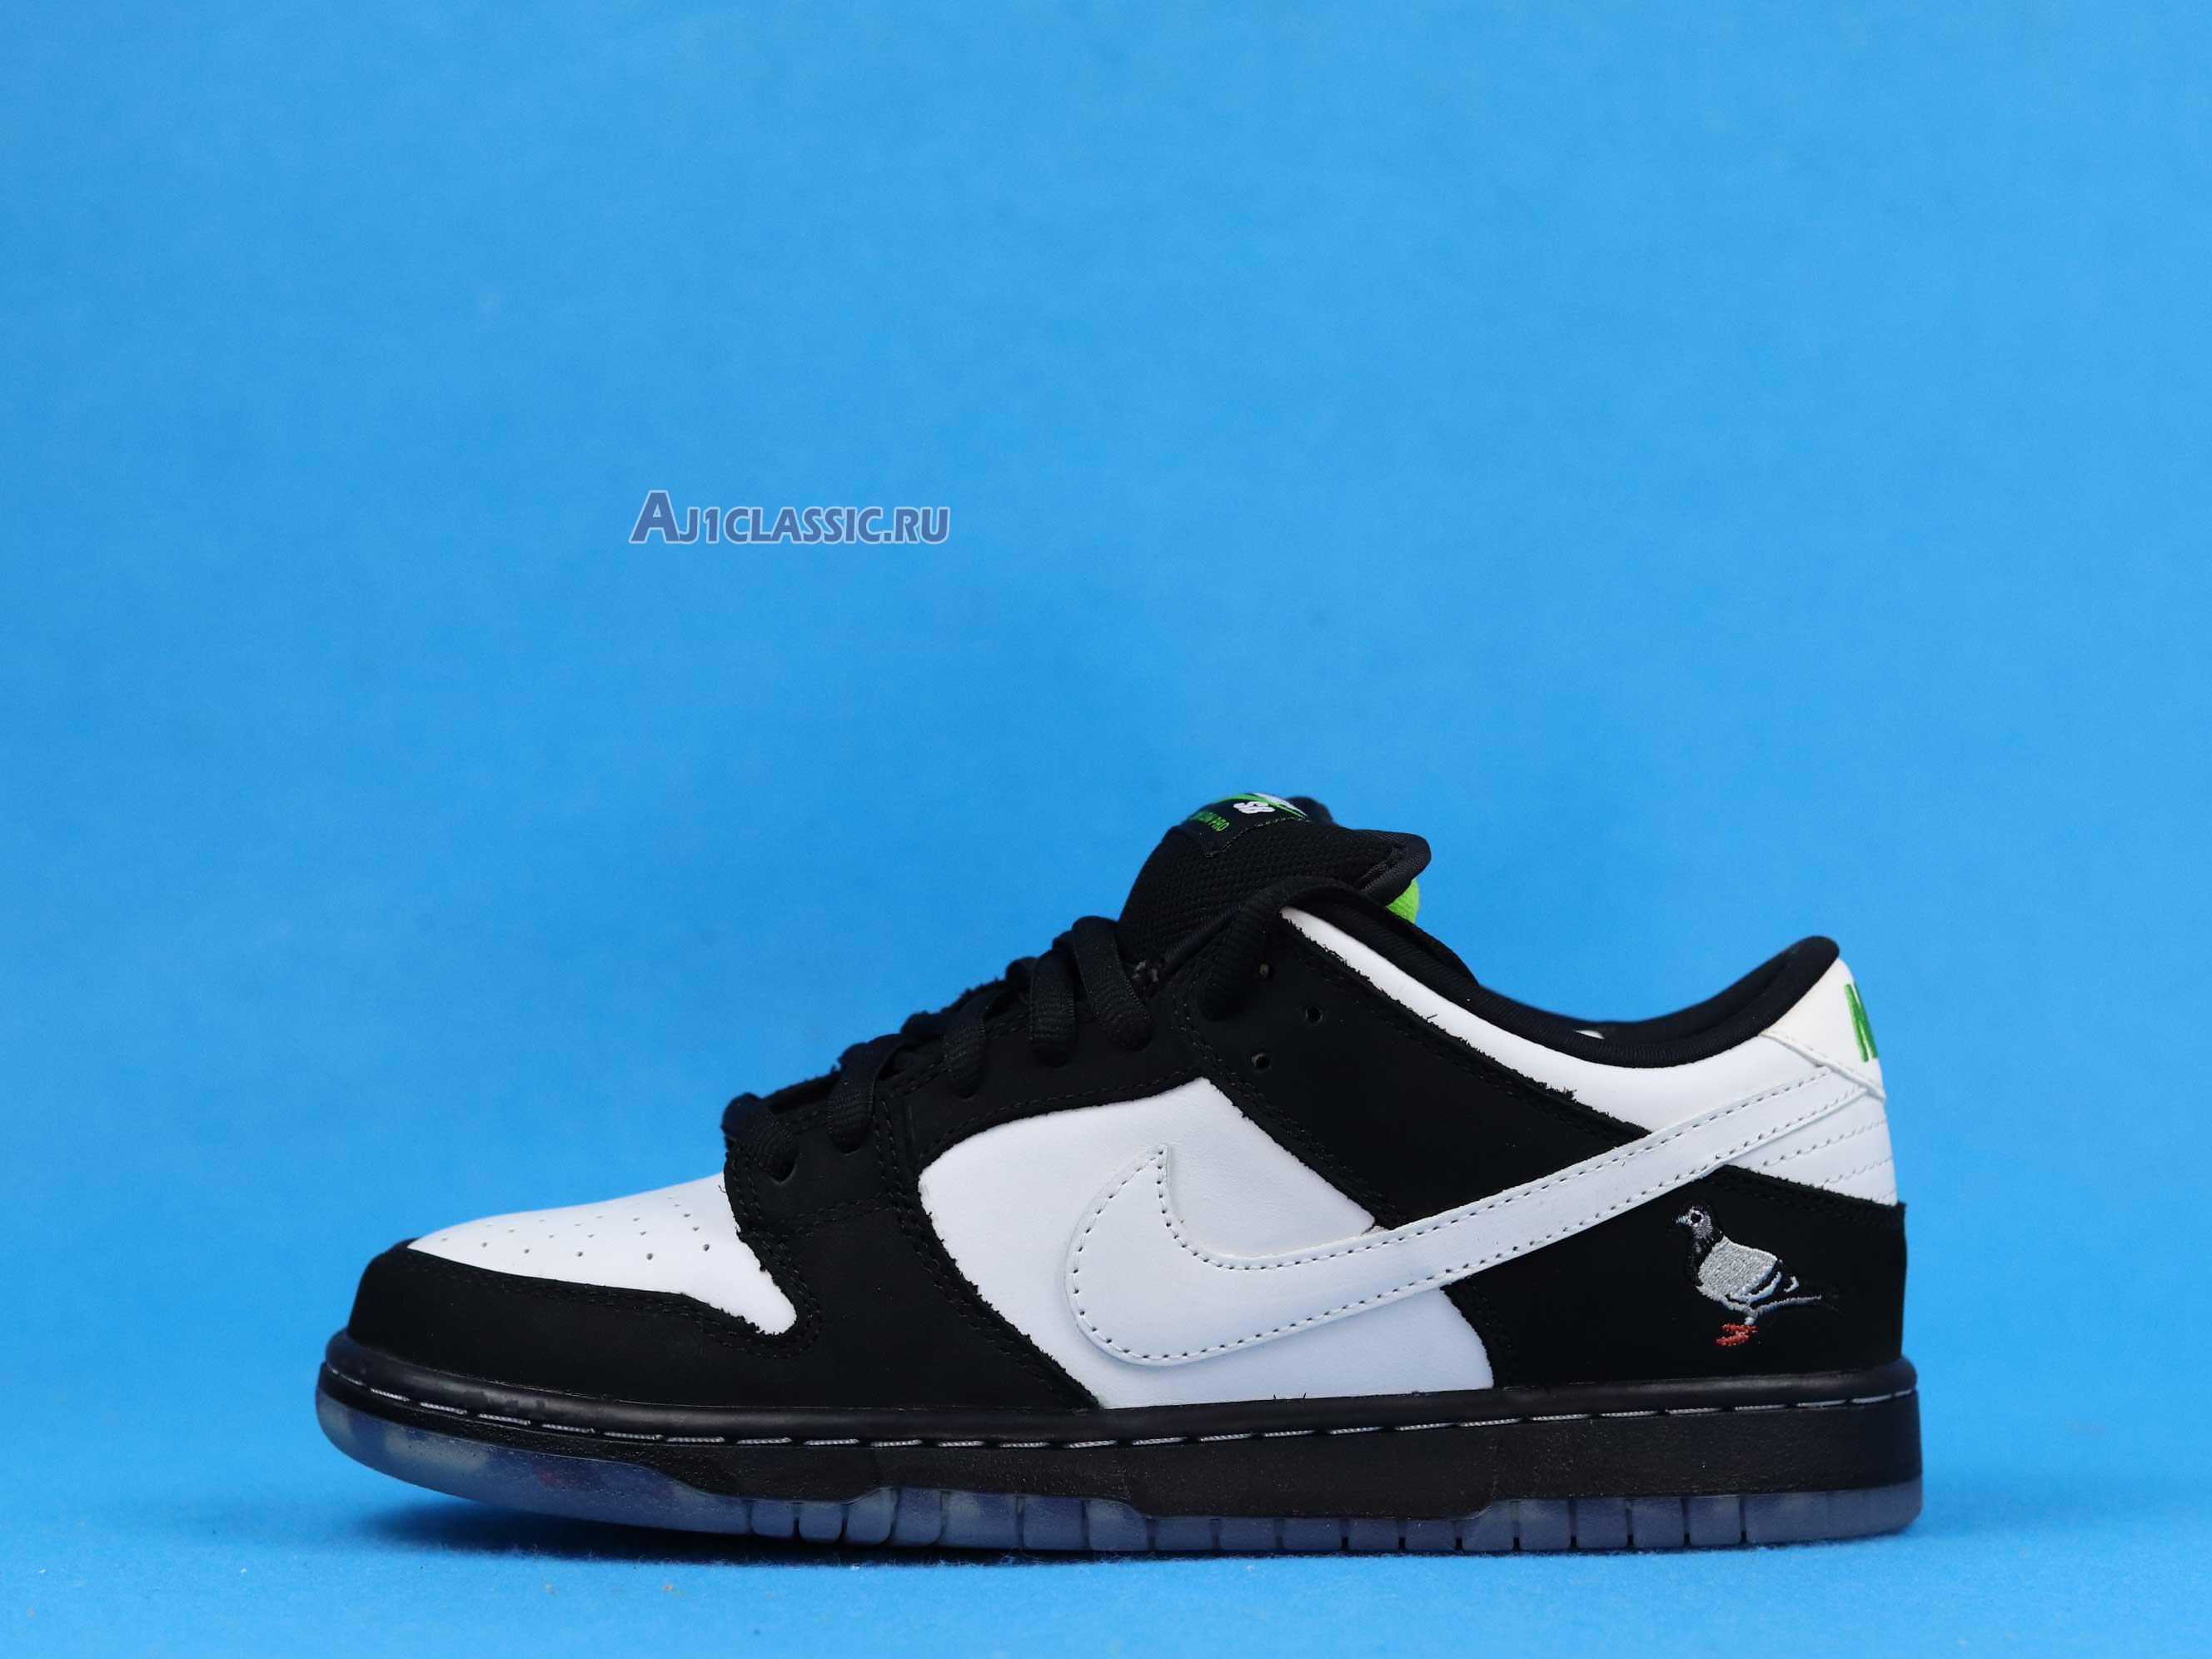 Nike Jeff Staple x Dunk Low Pro SB "Panda Pigeon" Special Box BV1310-013